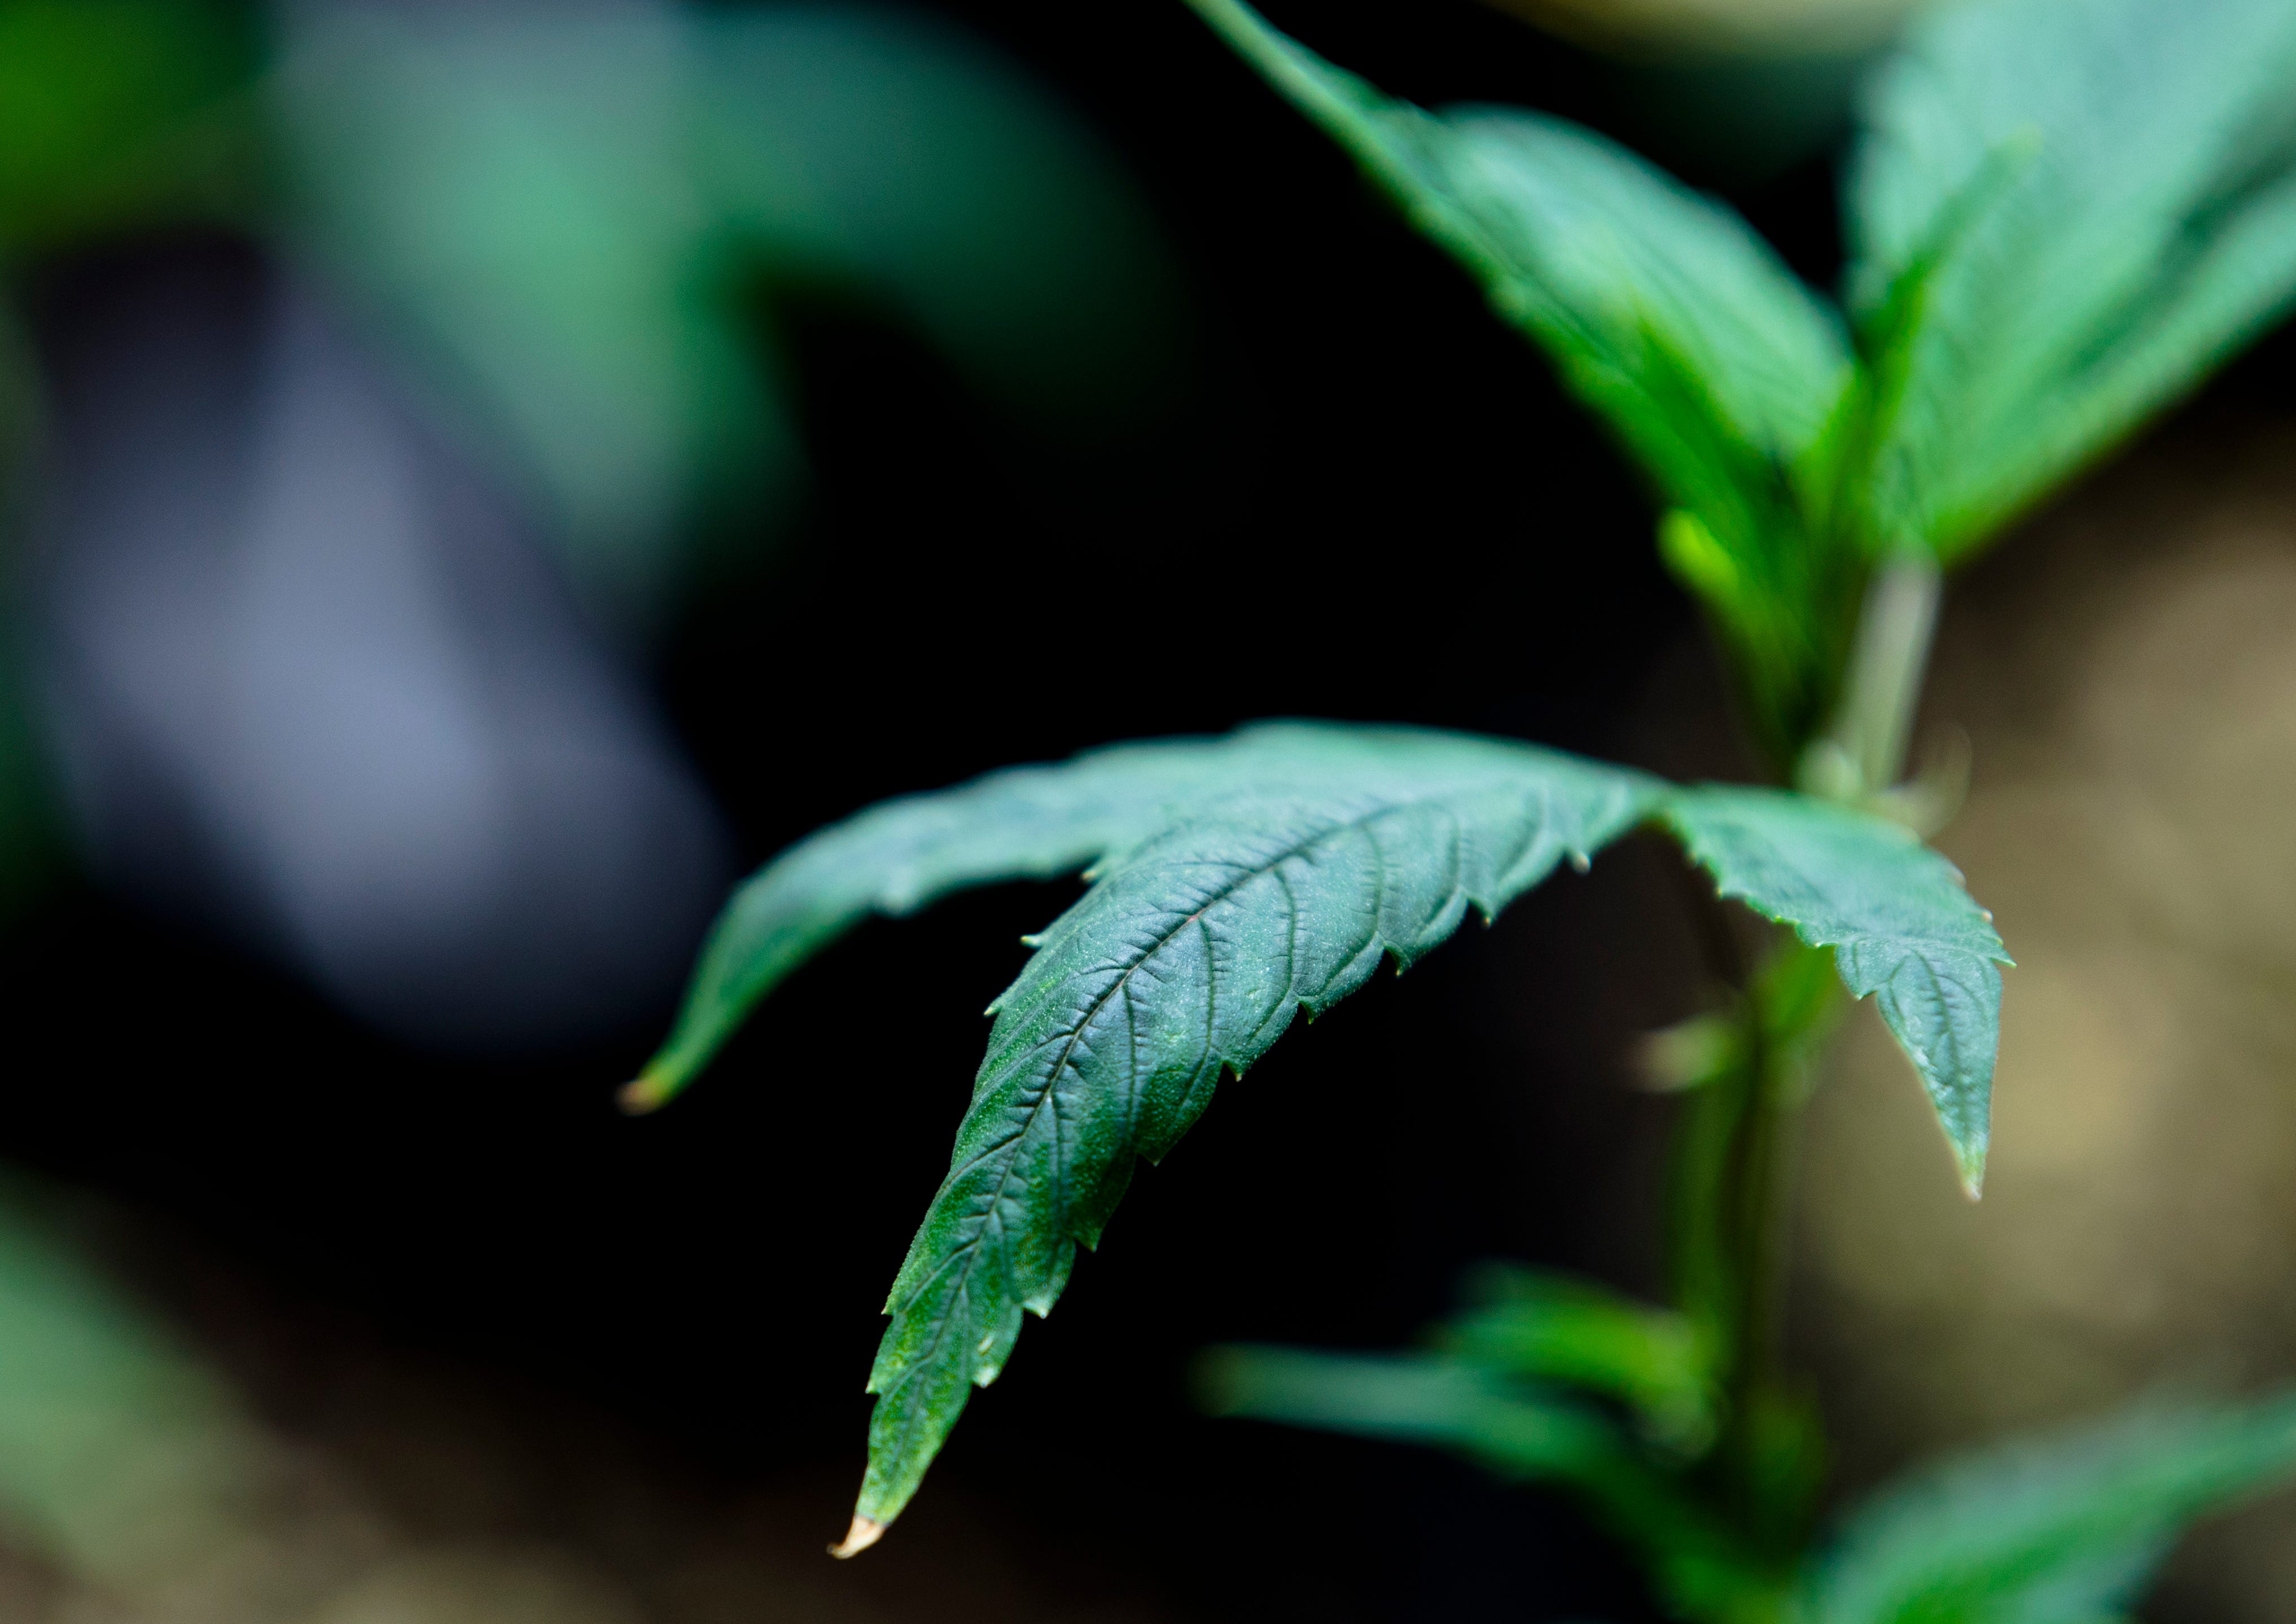 Ohio voters approve ballot proposal legalizing recreational marijuana use